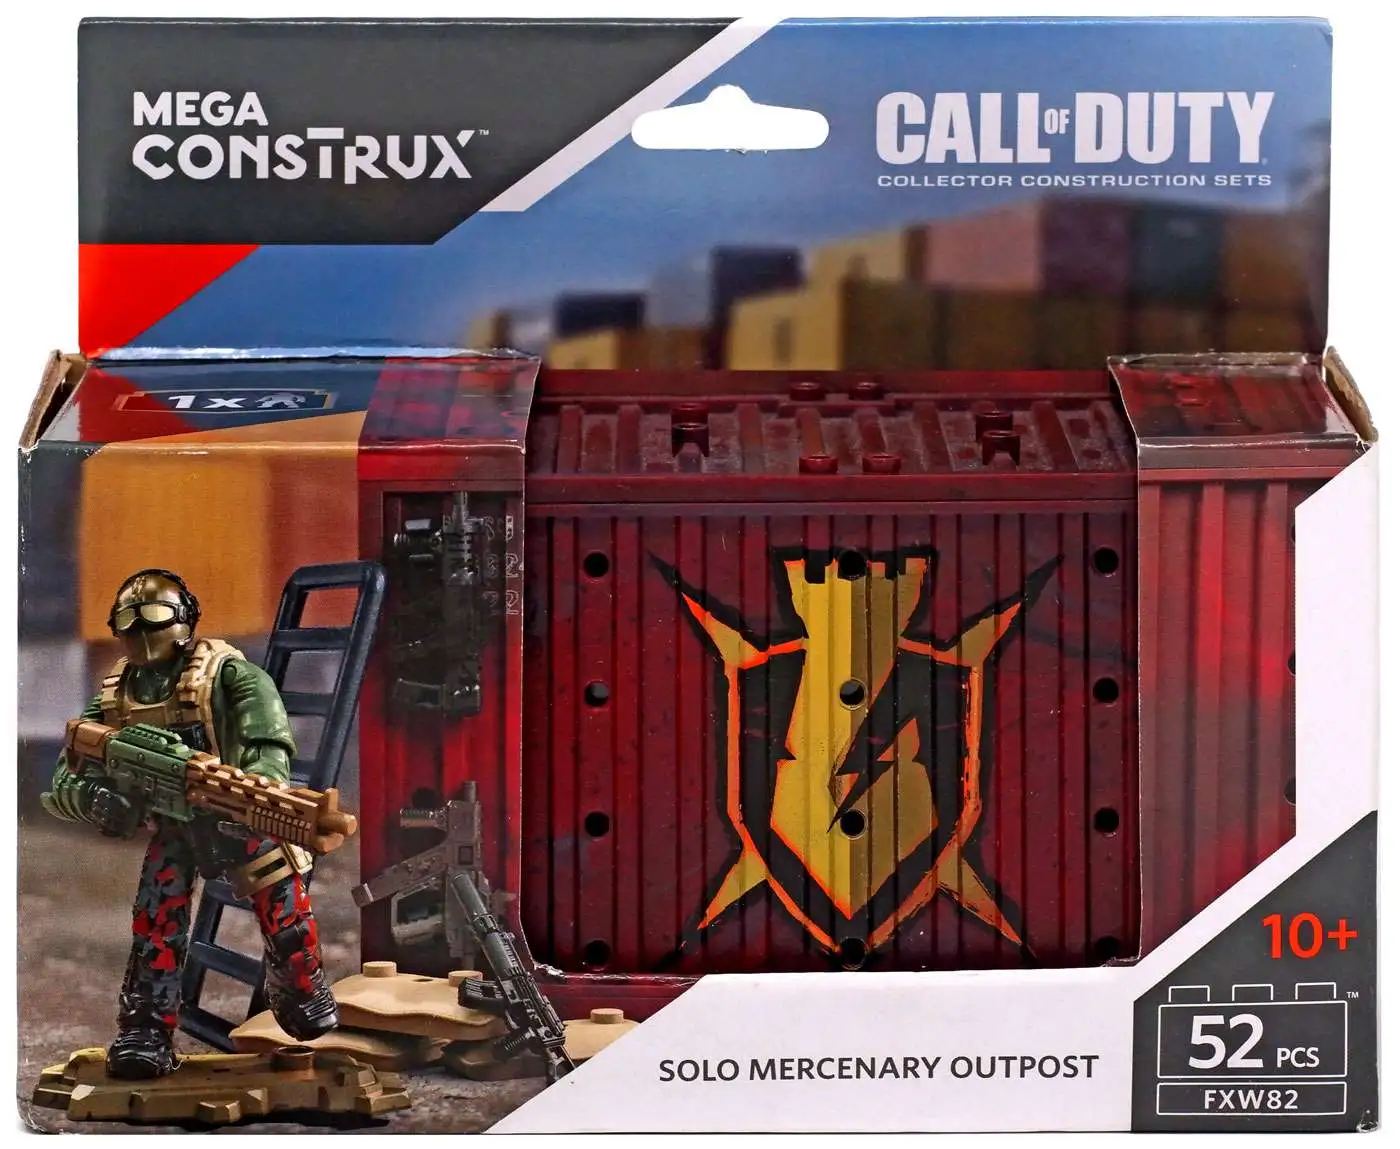 MEGA Construx Call of Duty Solo Mercenary Outpost Fxw82 2017 CODIGO Fxw80 for sale online 